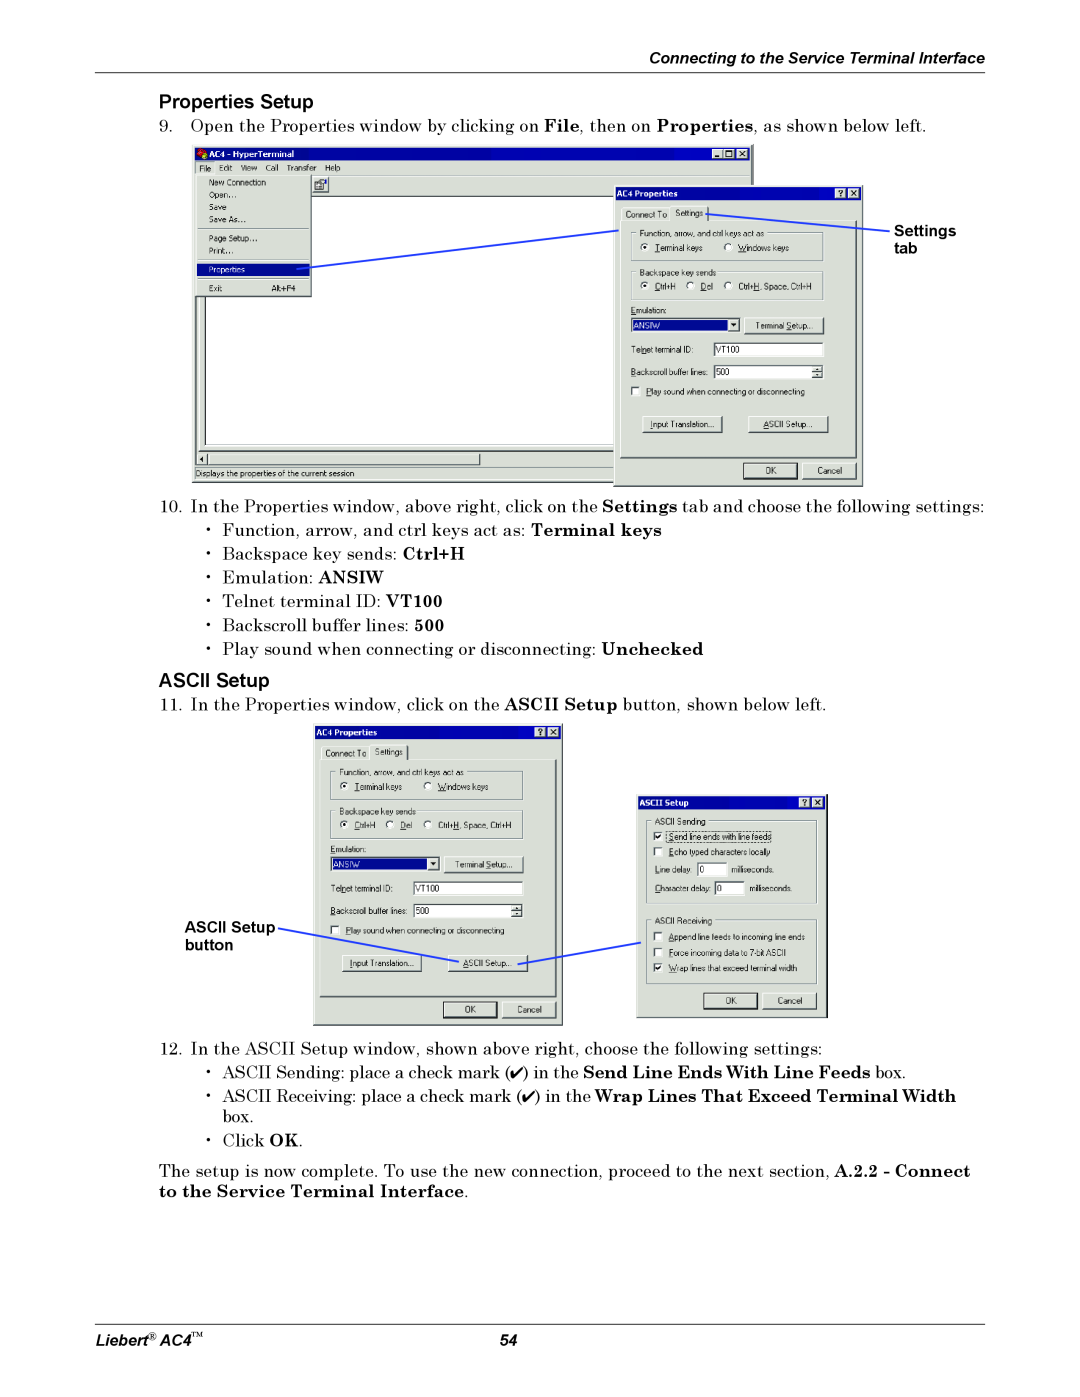 Emerson AC4 user manual Properties Setup, ASCII Setup 